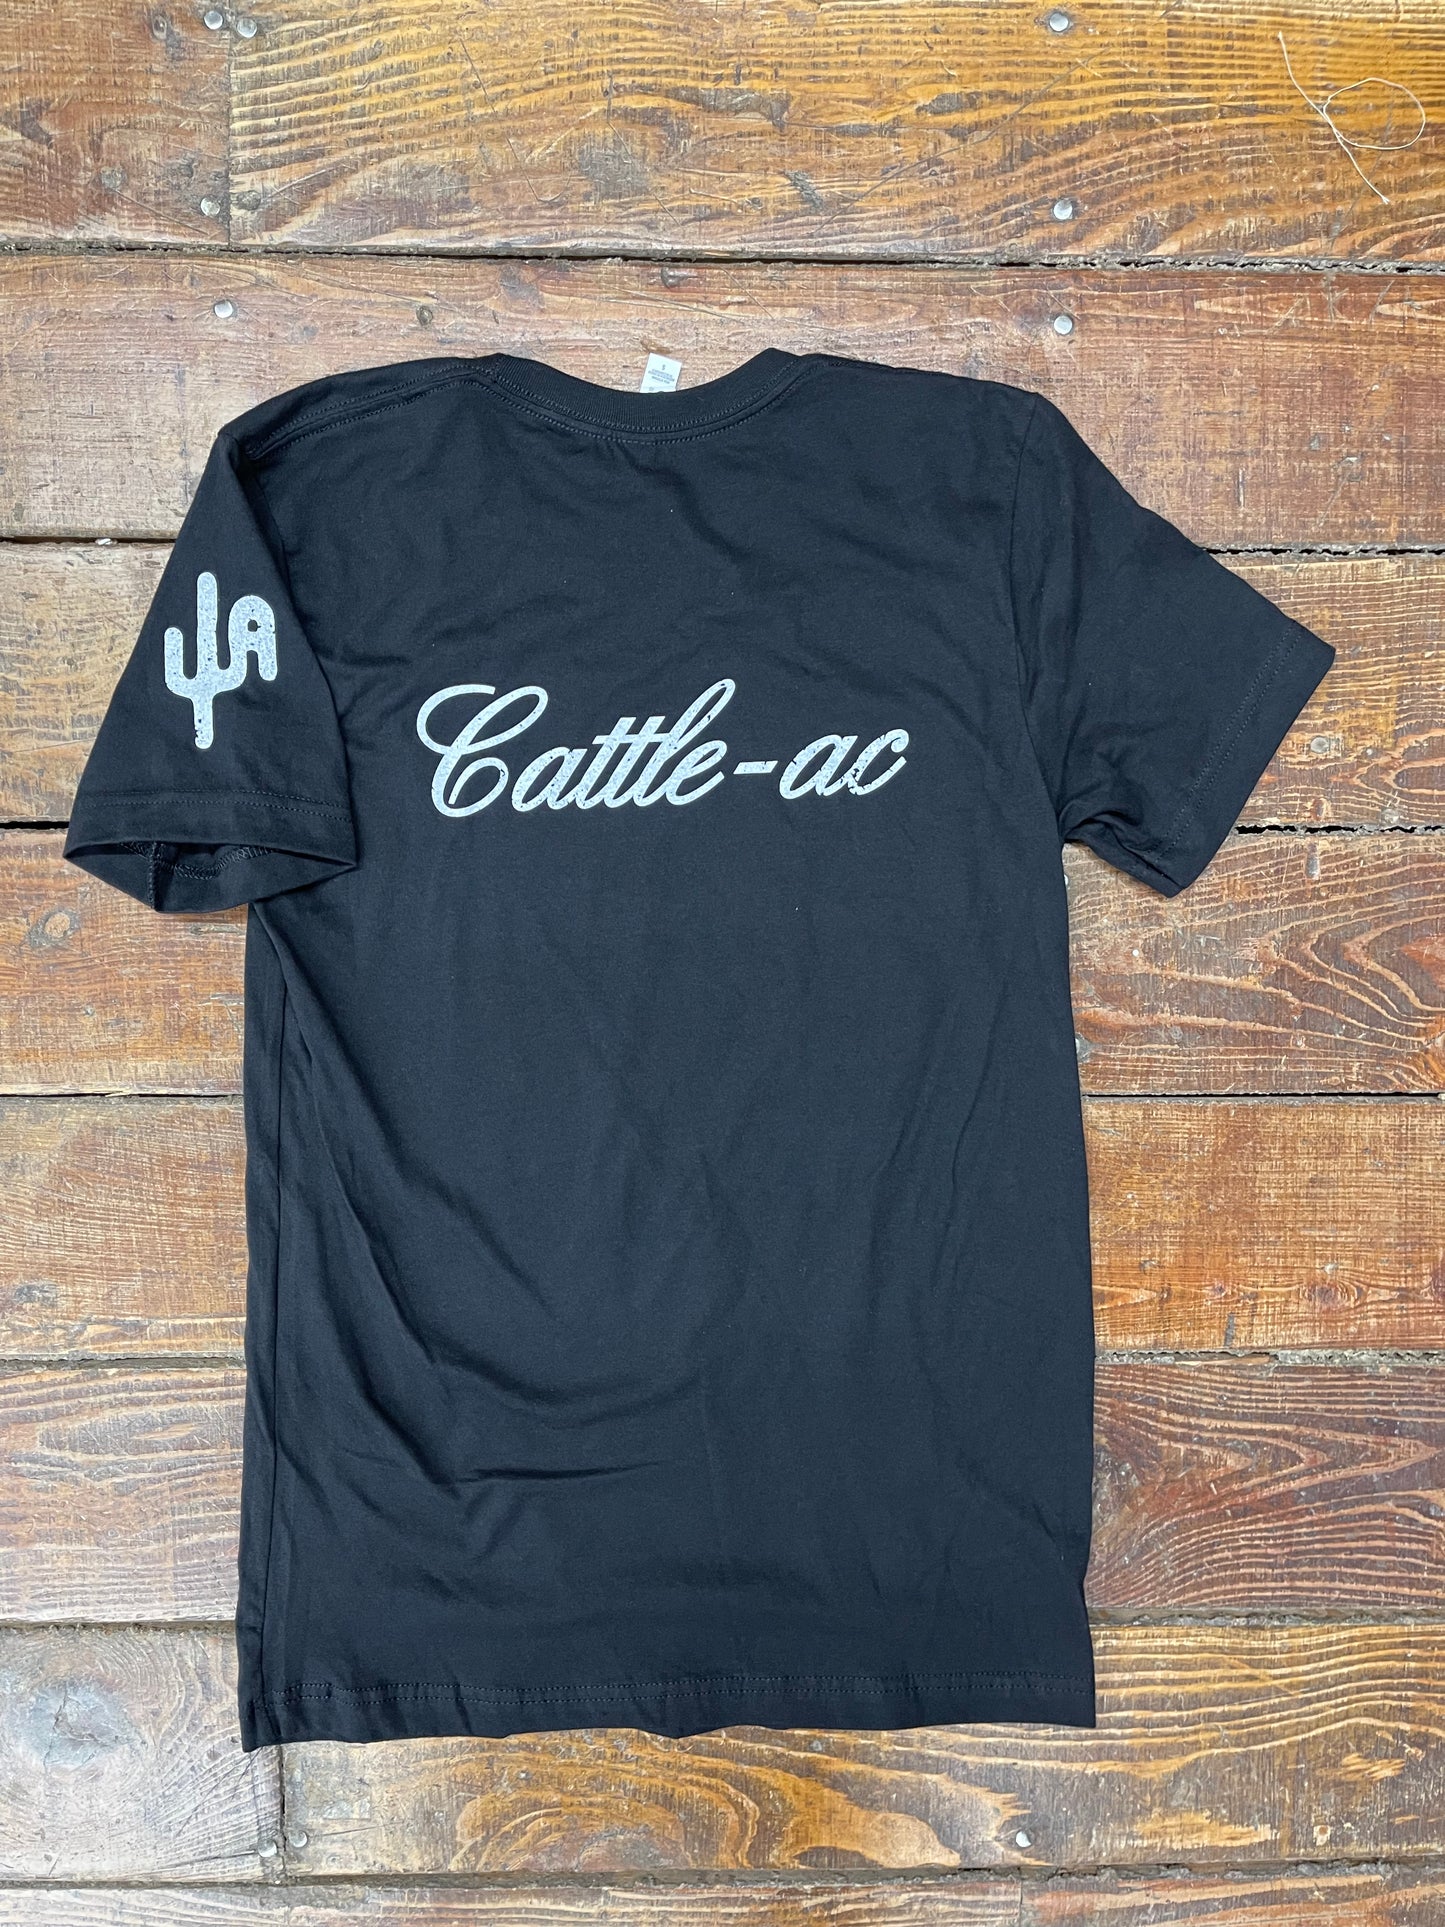 "Hustle" Cactus Alley Black T-shirt